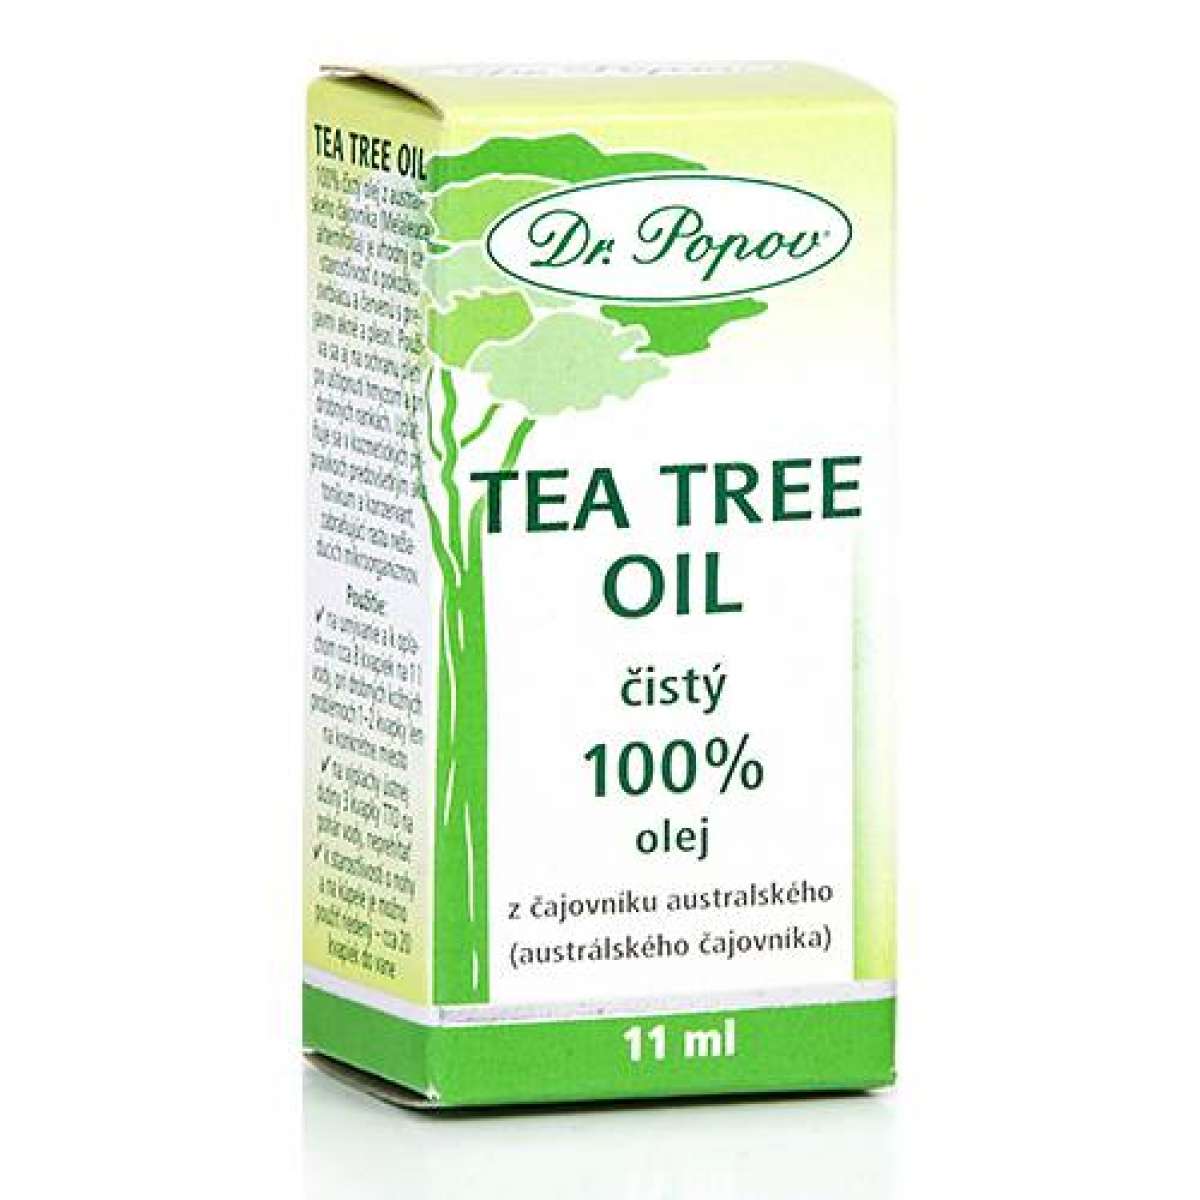 Чайное дерево форум. Масло чайного дерева. 100 Tea Tree Oil. Масло чайного дерева 100%. Капли чайного дерева.